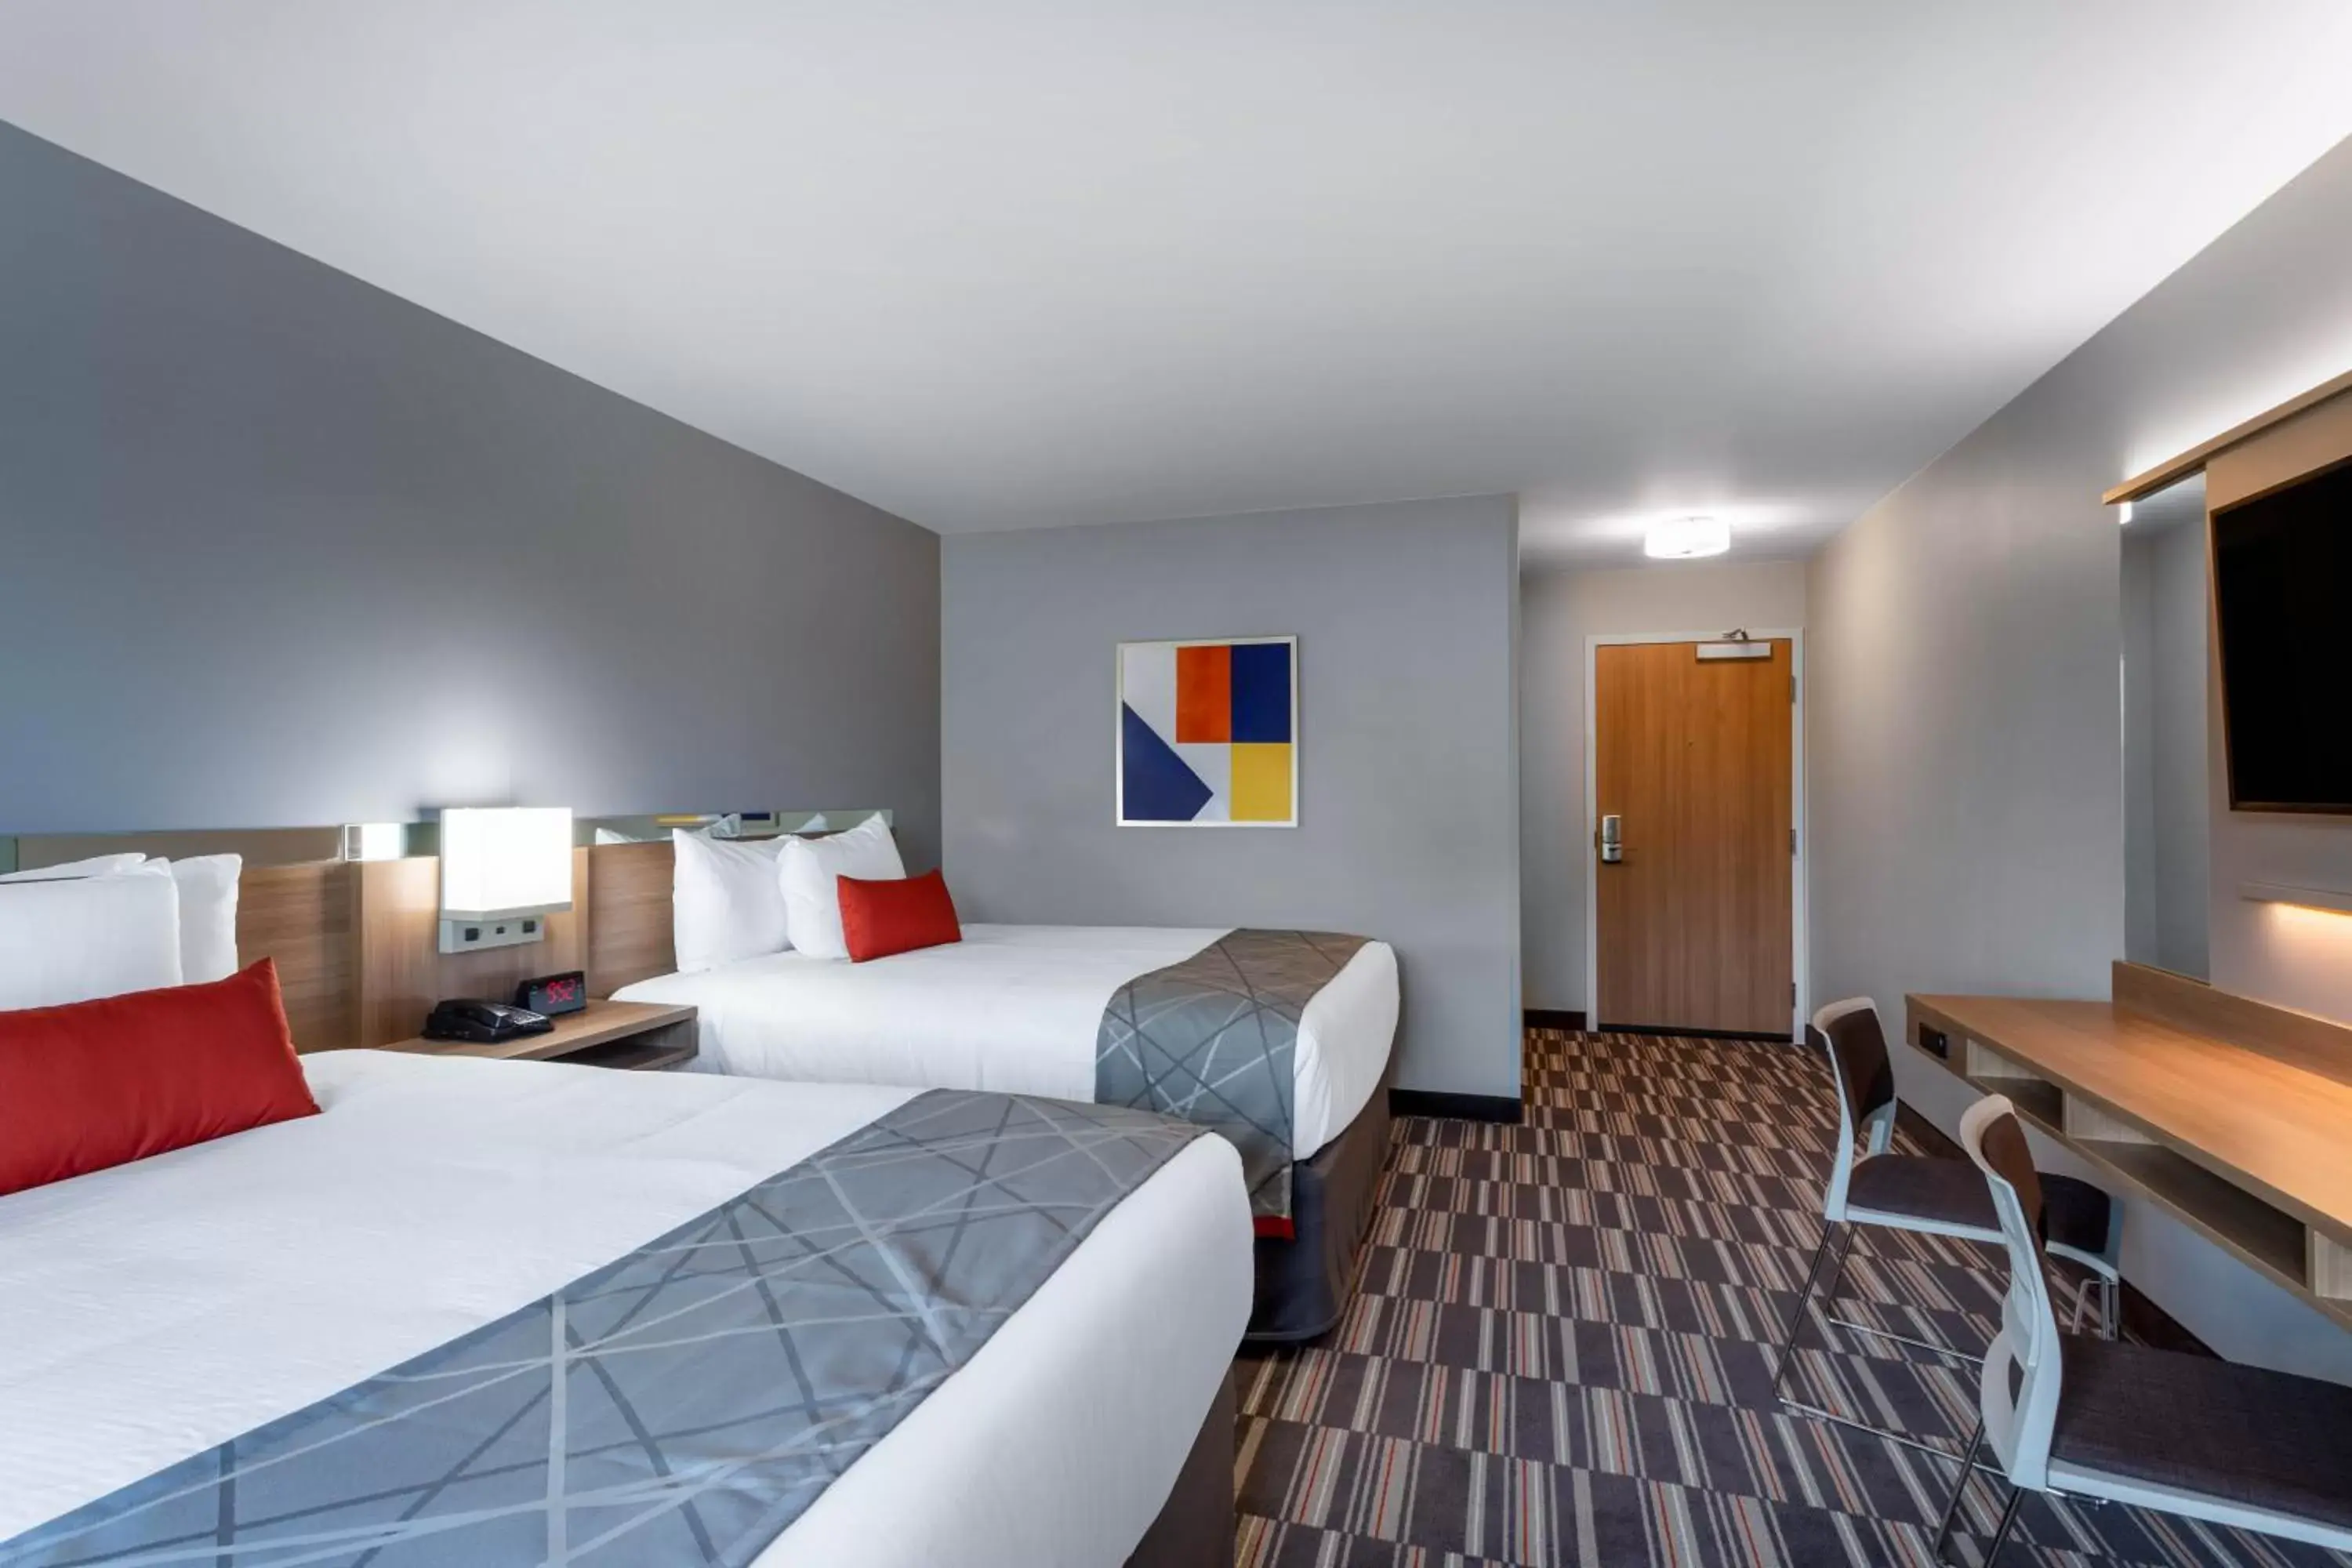 Room Photo in Microtel Inn & Suites by Wyndham Amsterdam